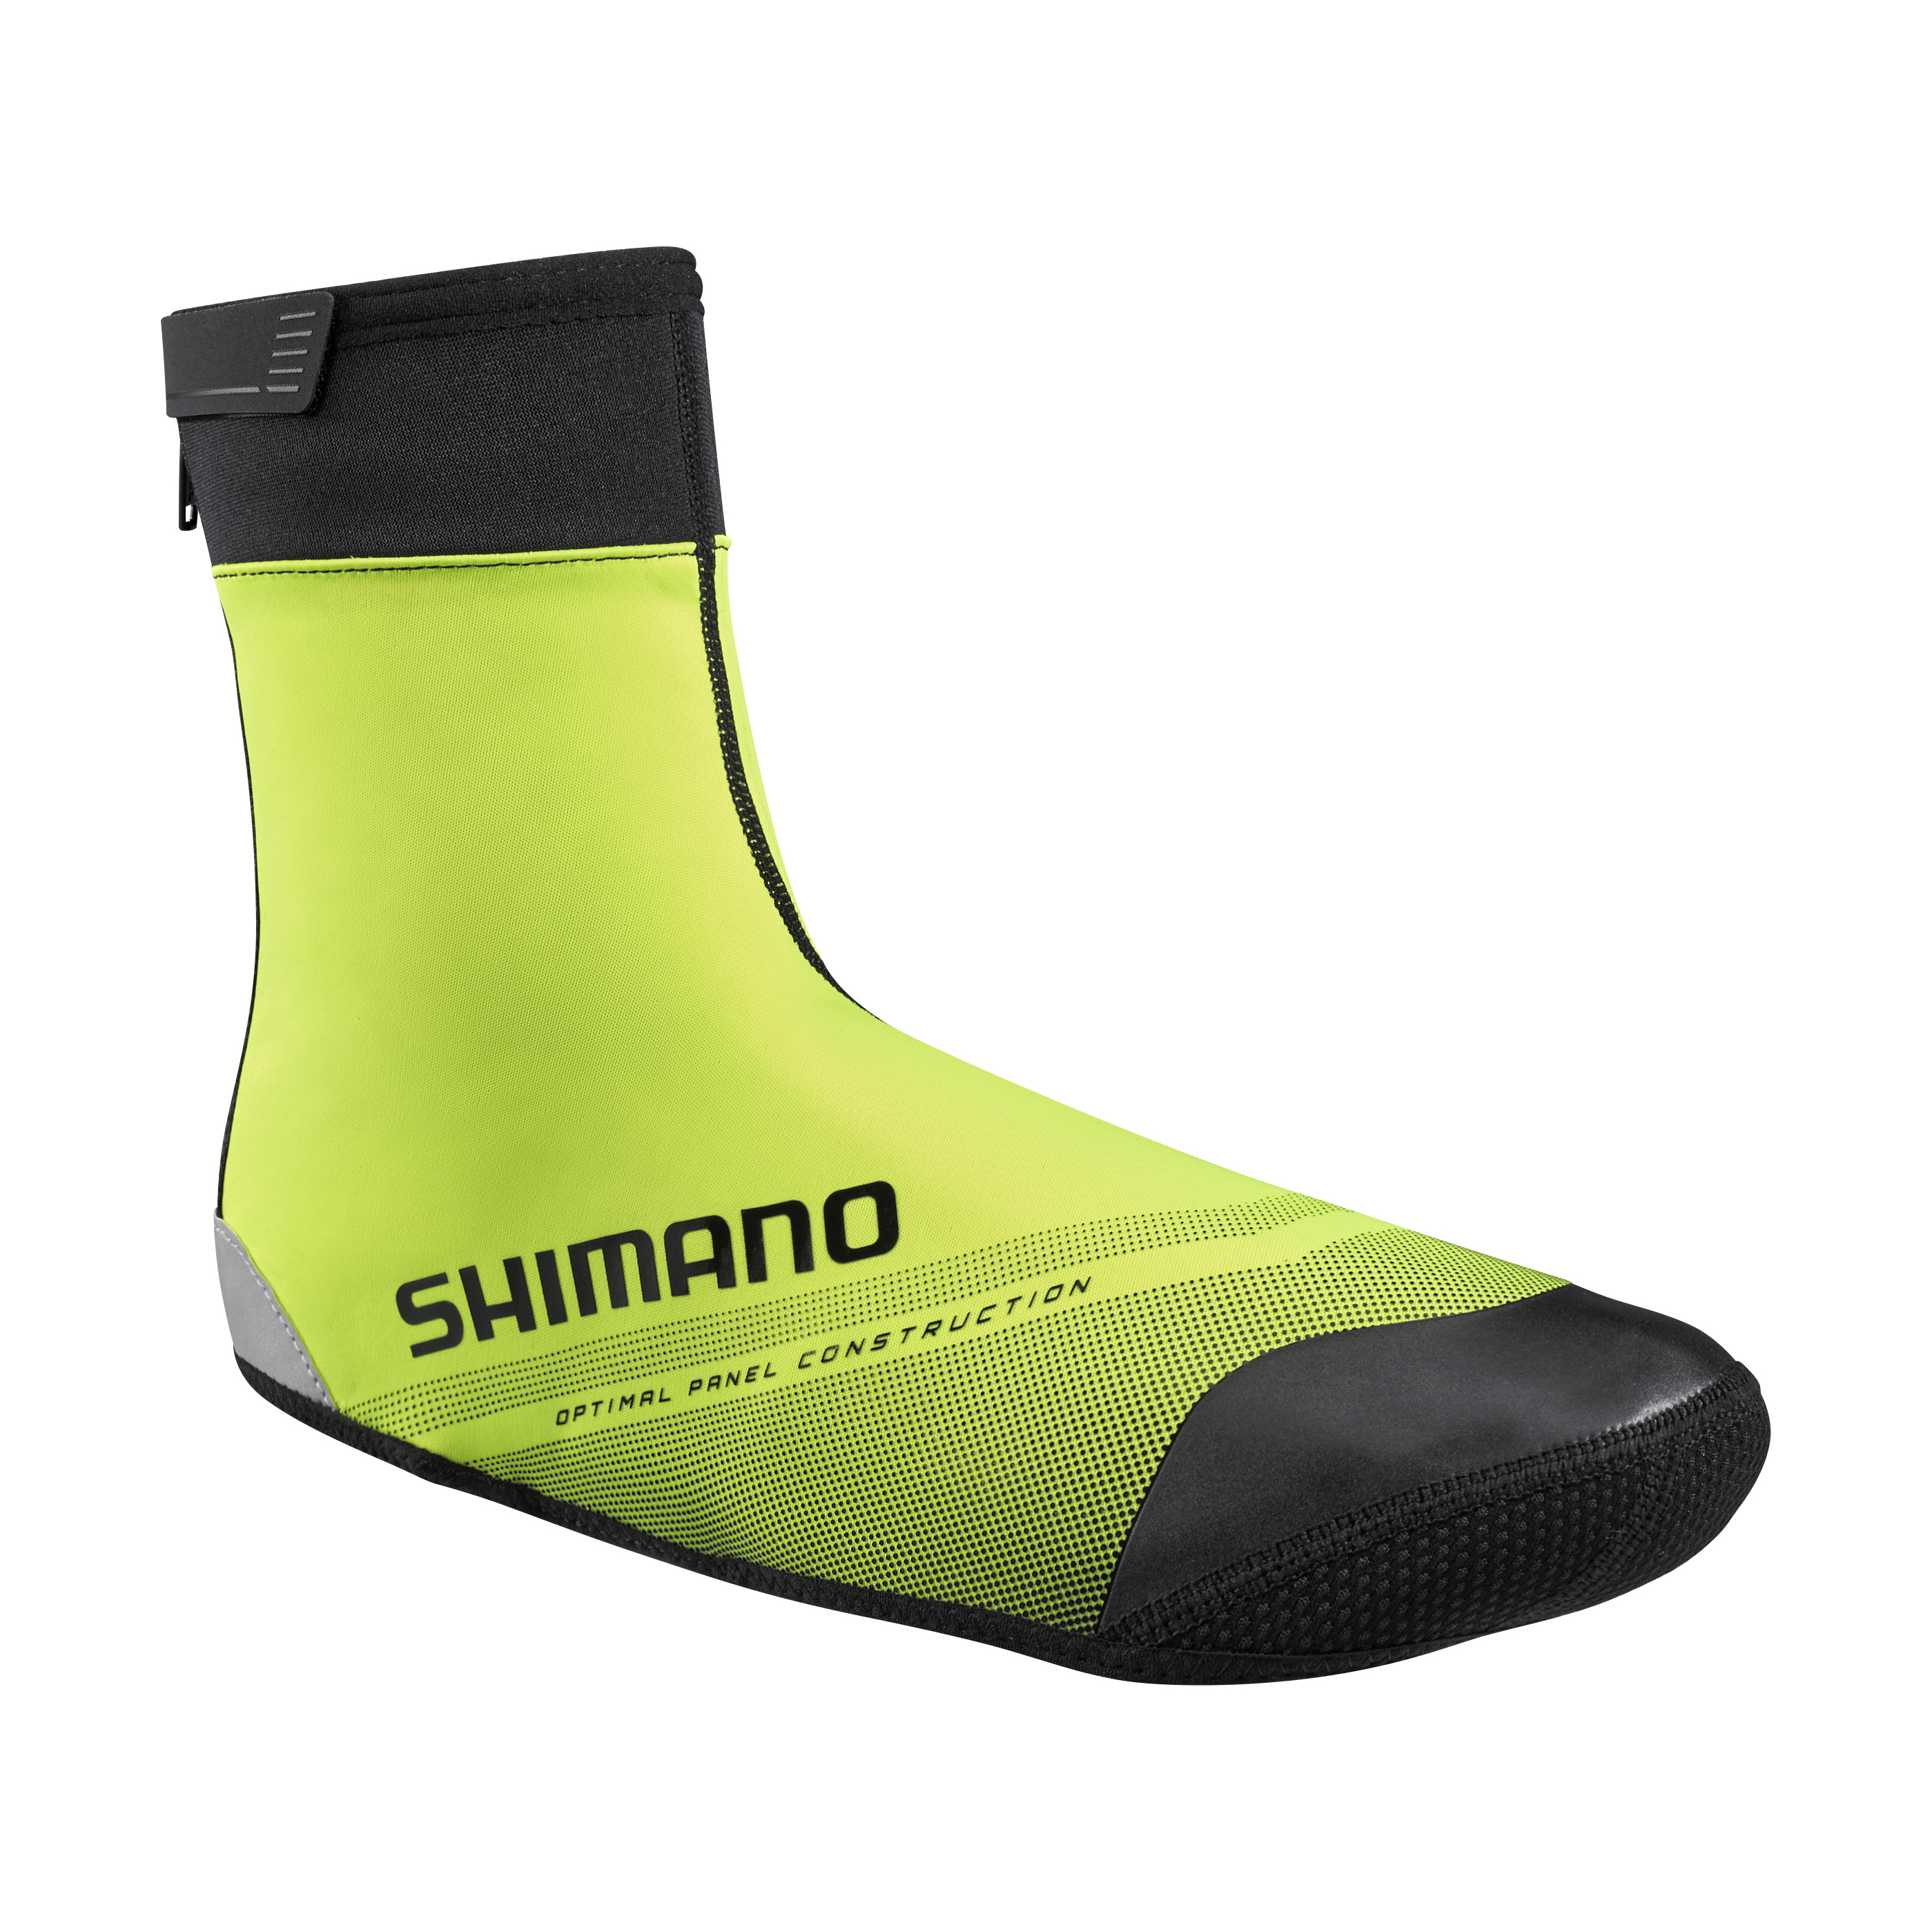 SHIMANO S1100X SOFT SHELL návleky na obuv (5-10°C), neon žlutá, XXL (47-49)